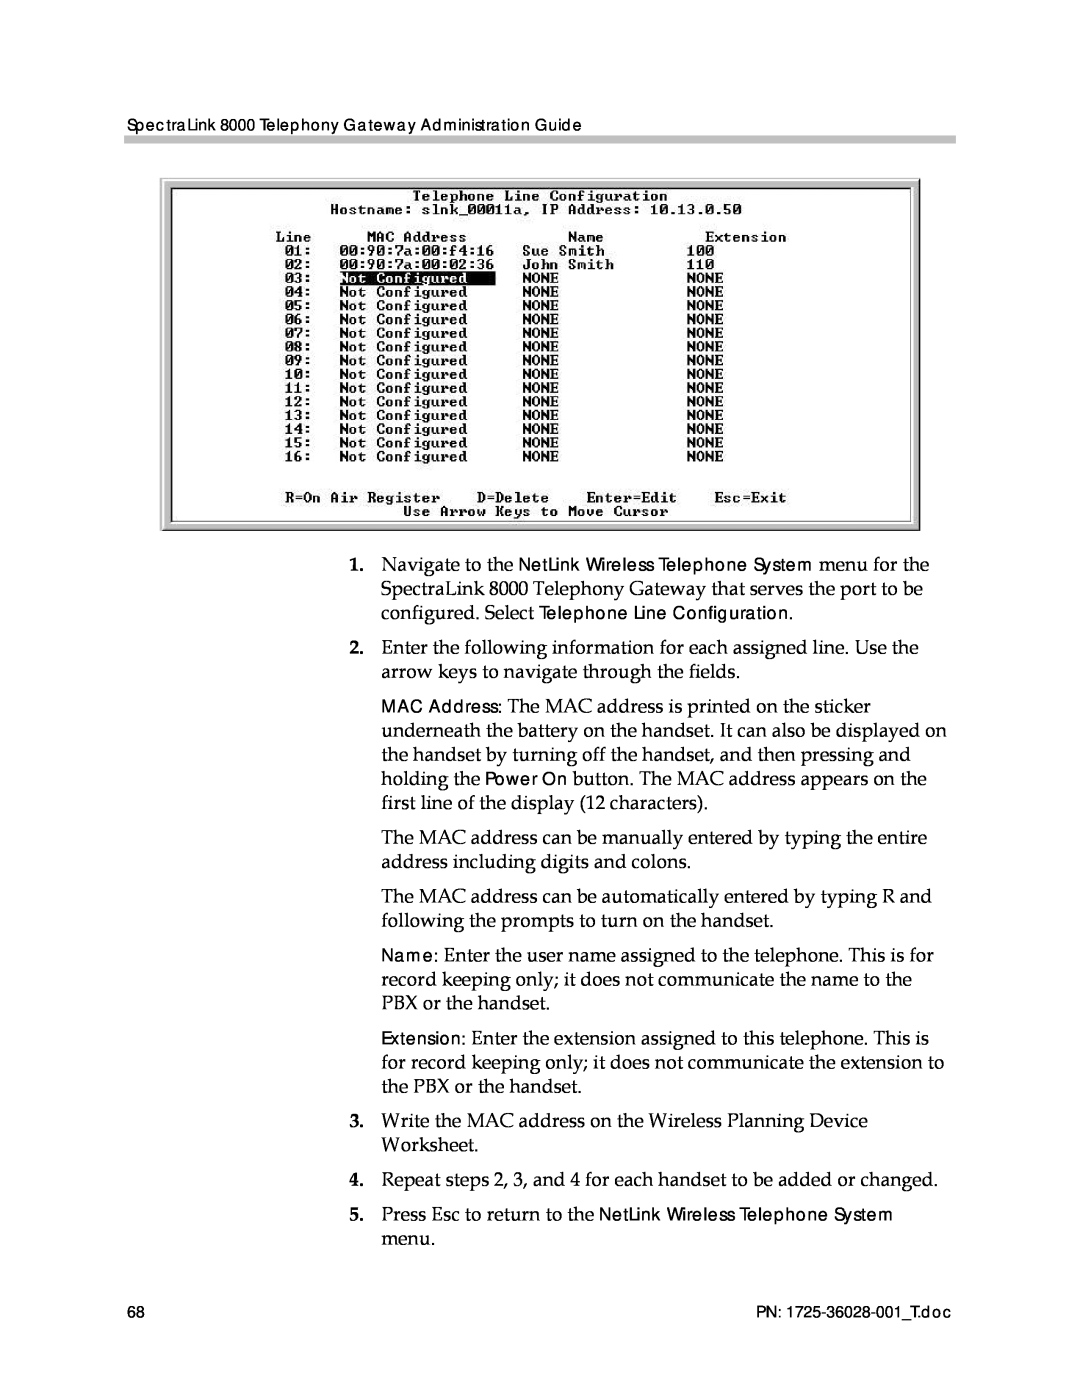 Polycom 1725-36028-001 manual Write the MAC address on the Wireless Planning Device Worksheet 